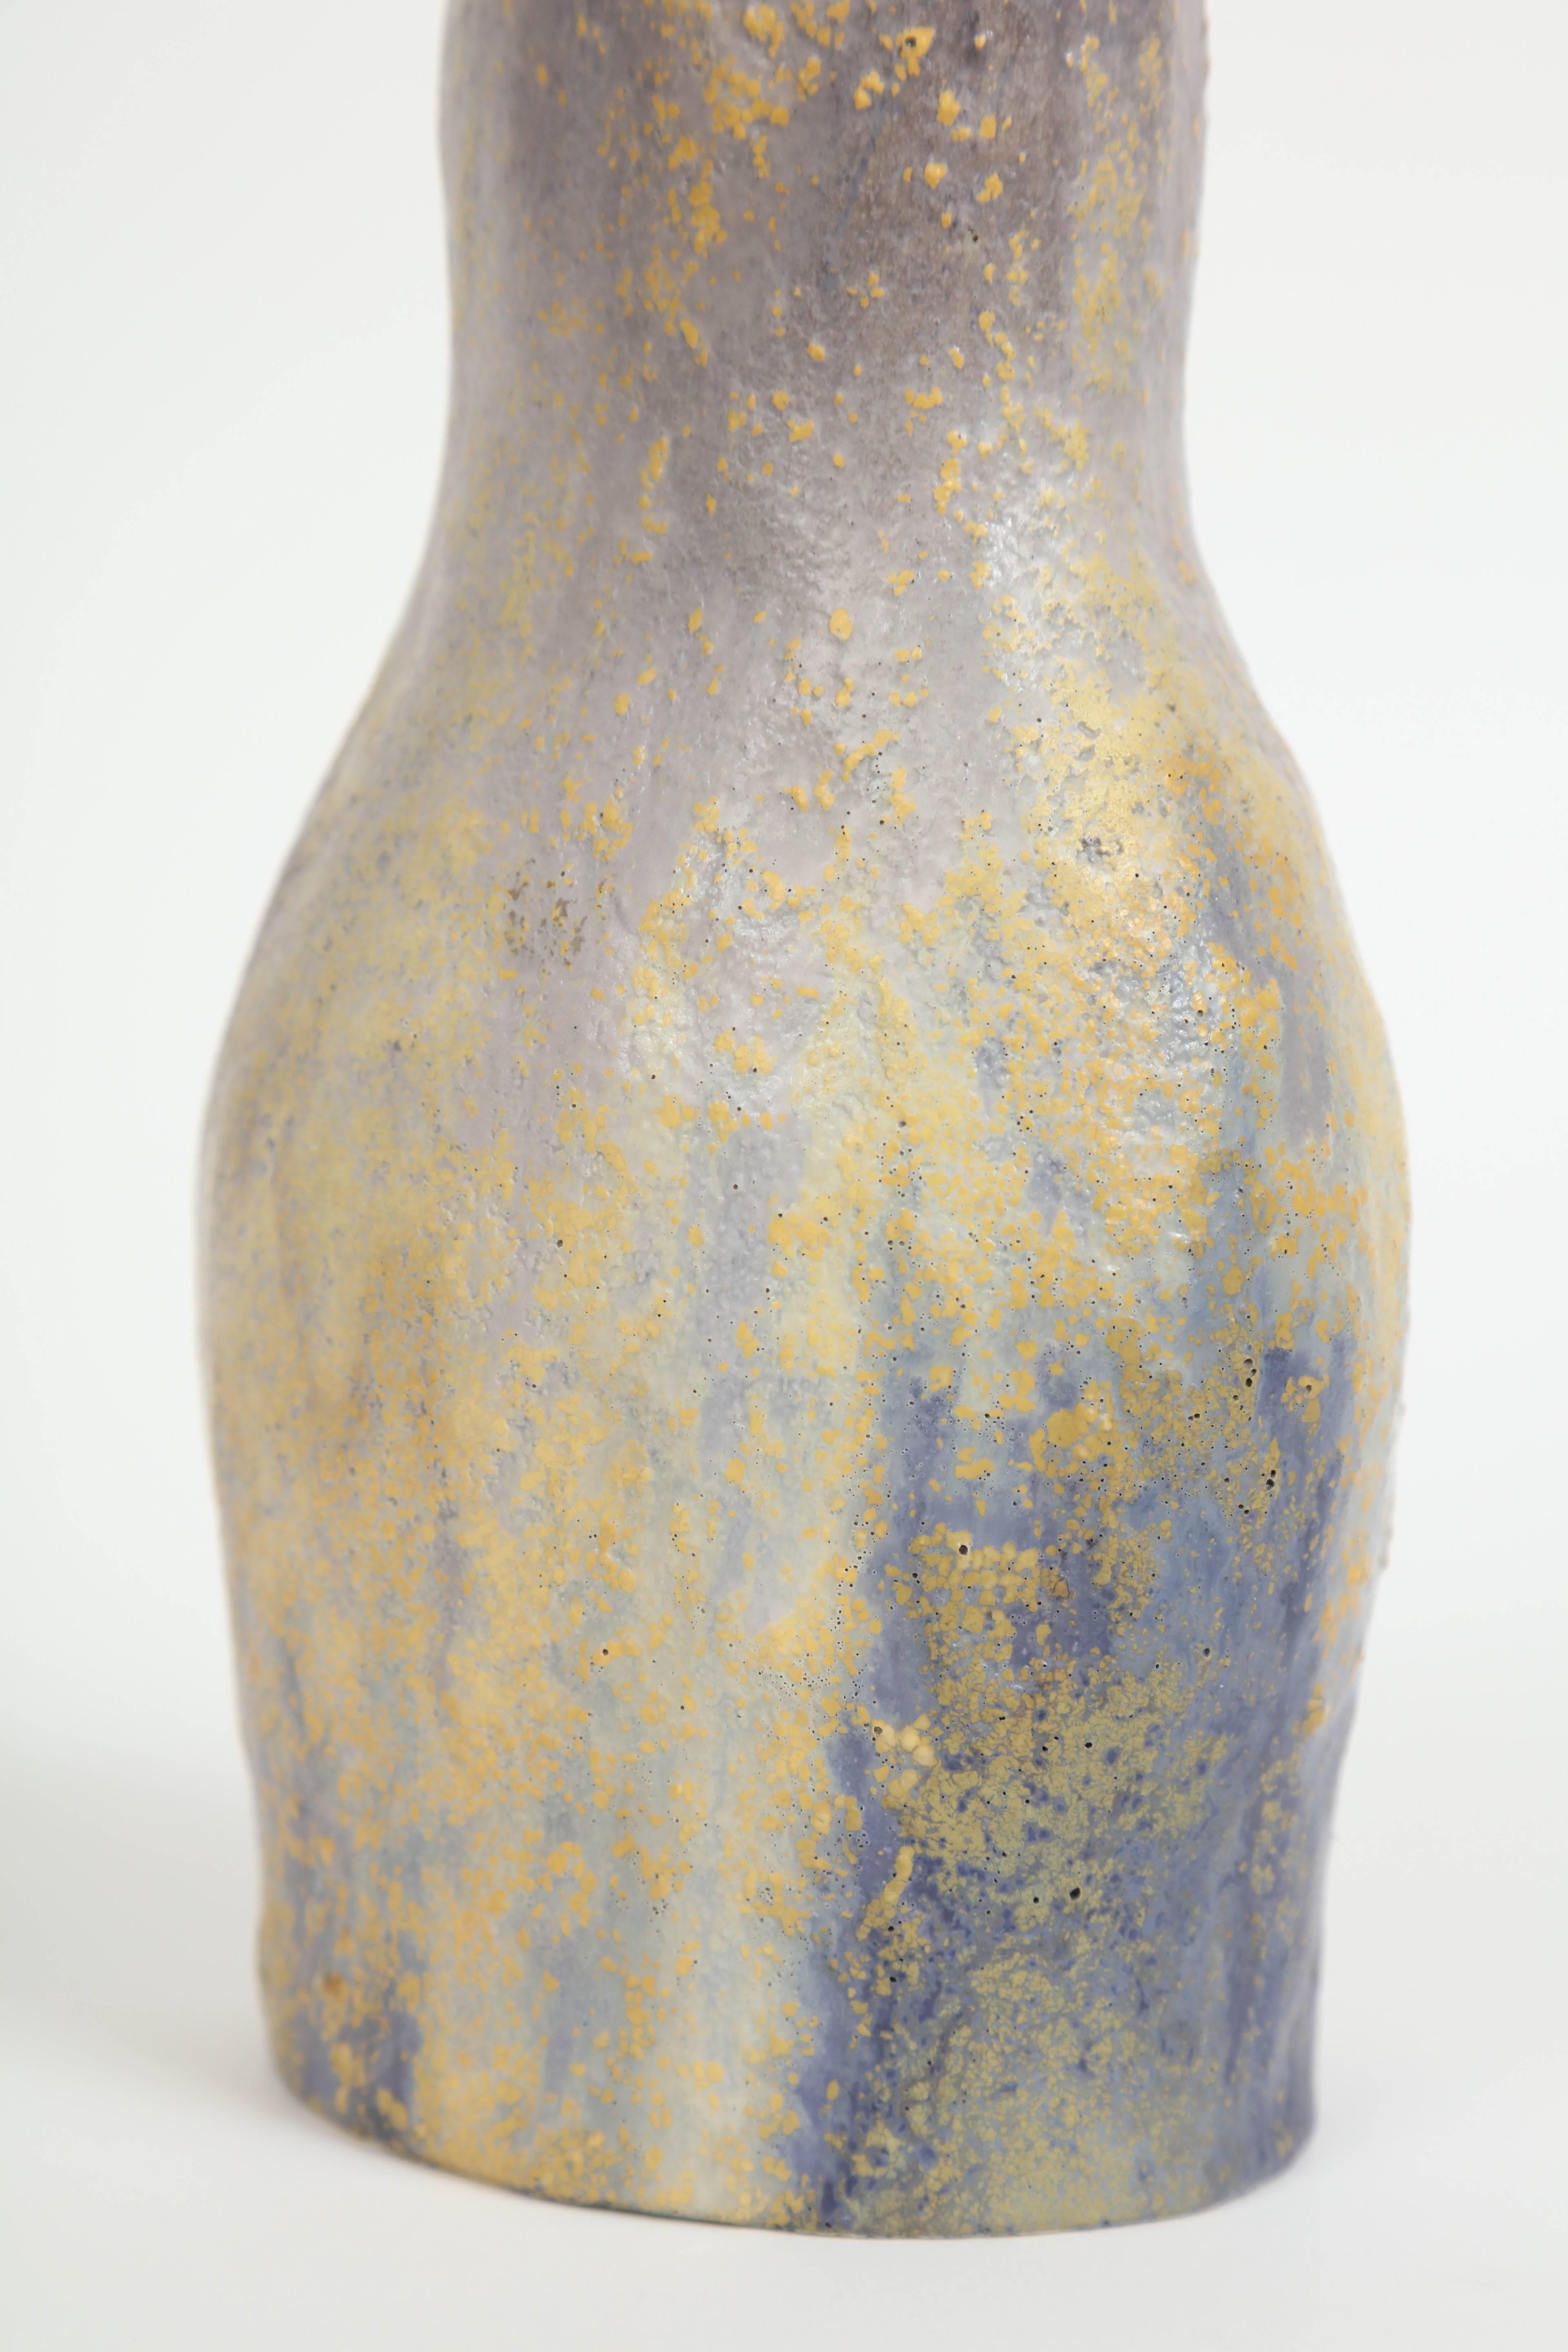 Marcello Fantoni Ceramic Bottle Vase, Glazed Stoneware, circa 1970s For Sale 2